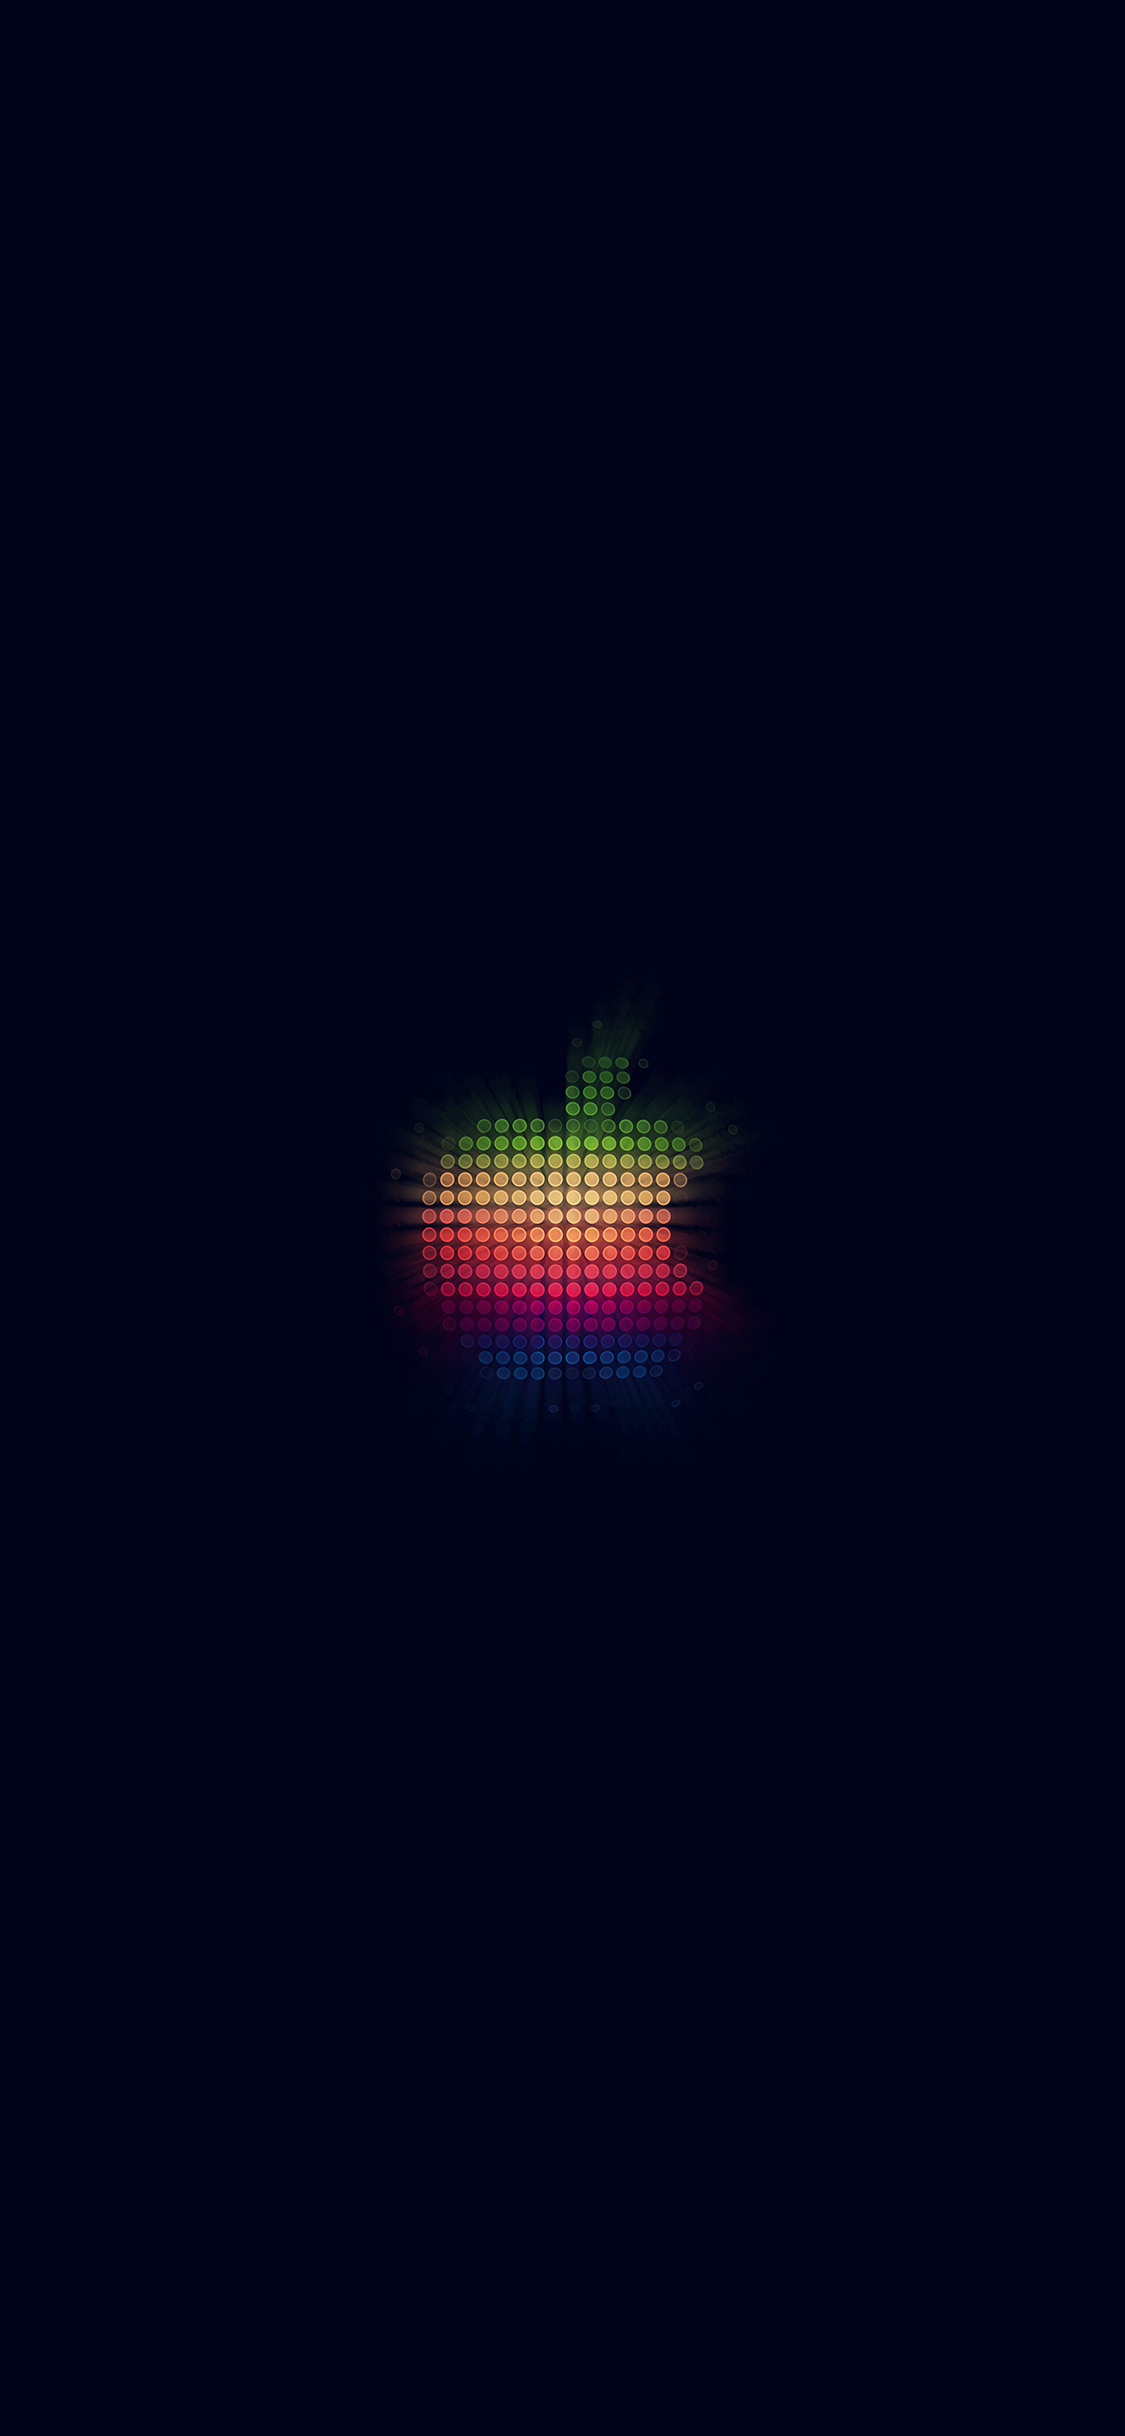 iPhone X wallpaper. logo apple rainbow pixel art illustration blue